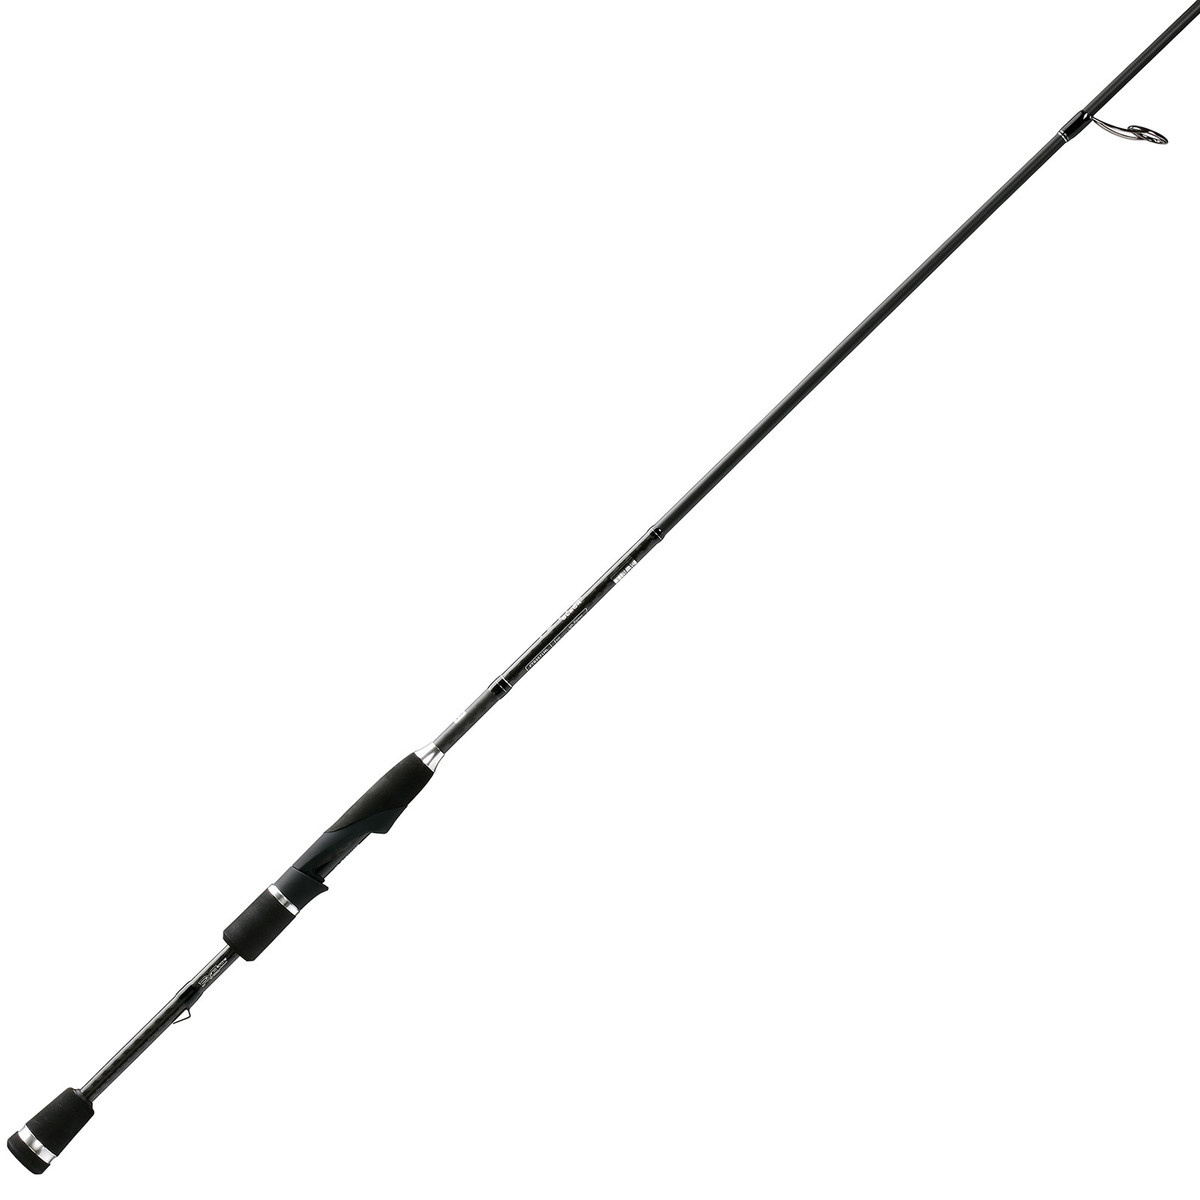 13 Fishing Fate V3 - 7'1 M Spinning Rod - 1PC - All Seasons Sports